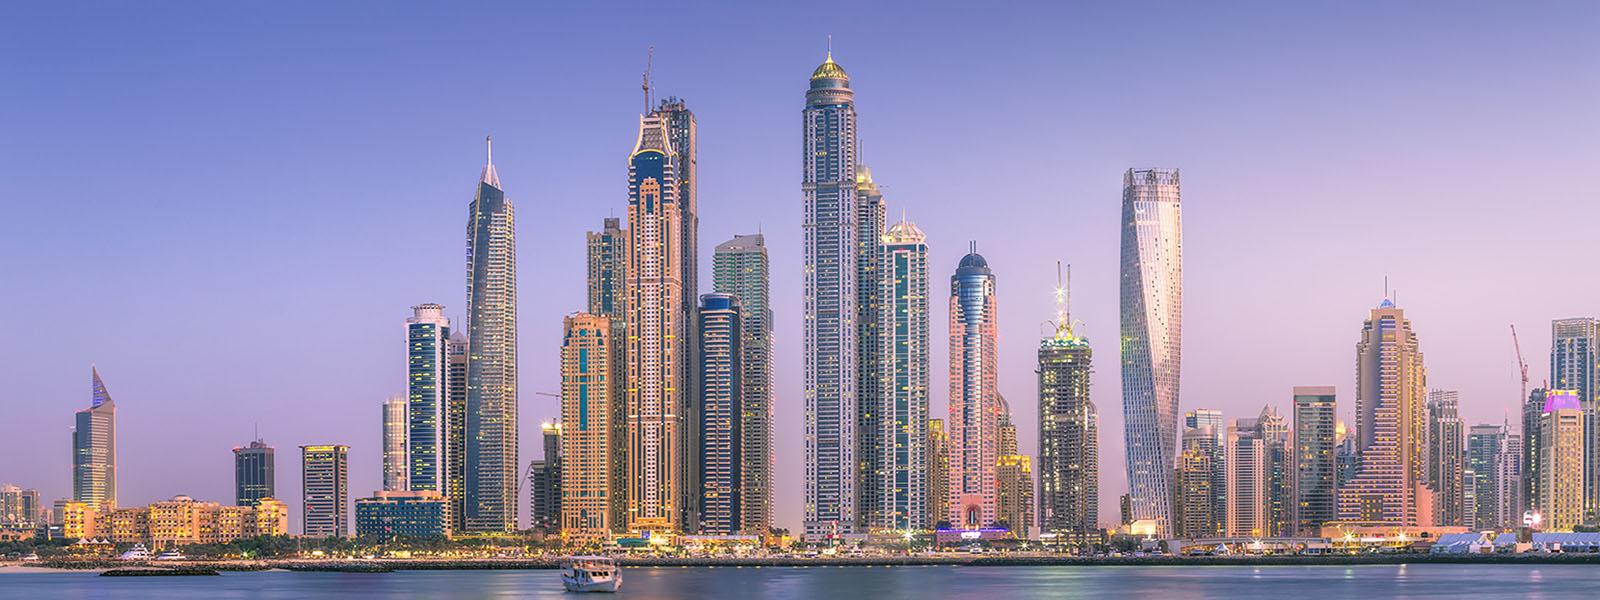 Dubai city scape